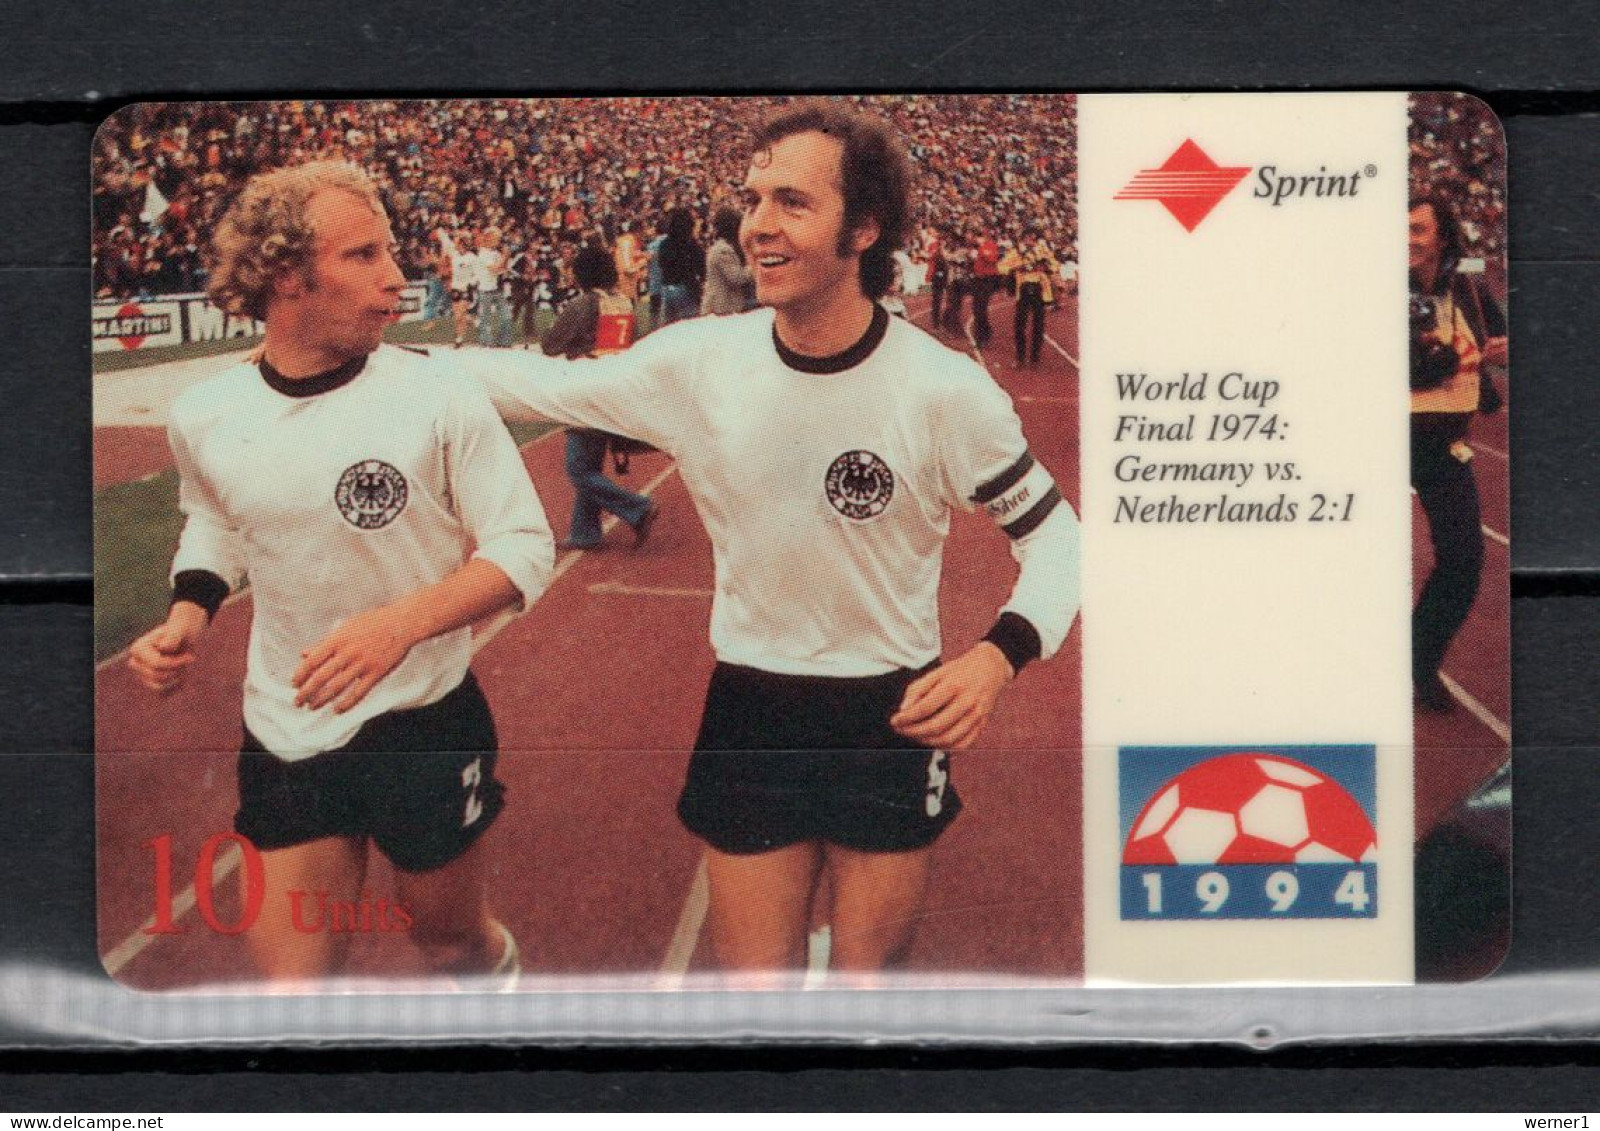 USA 1994 Football Soccer World Cup Phonecard With Franz Beckenbauer And Berti Vogts - Sport